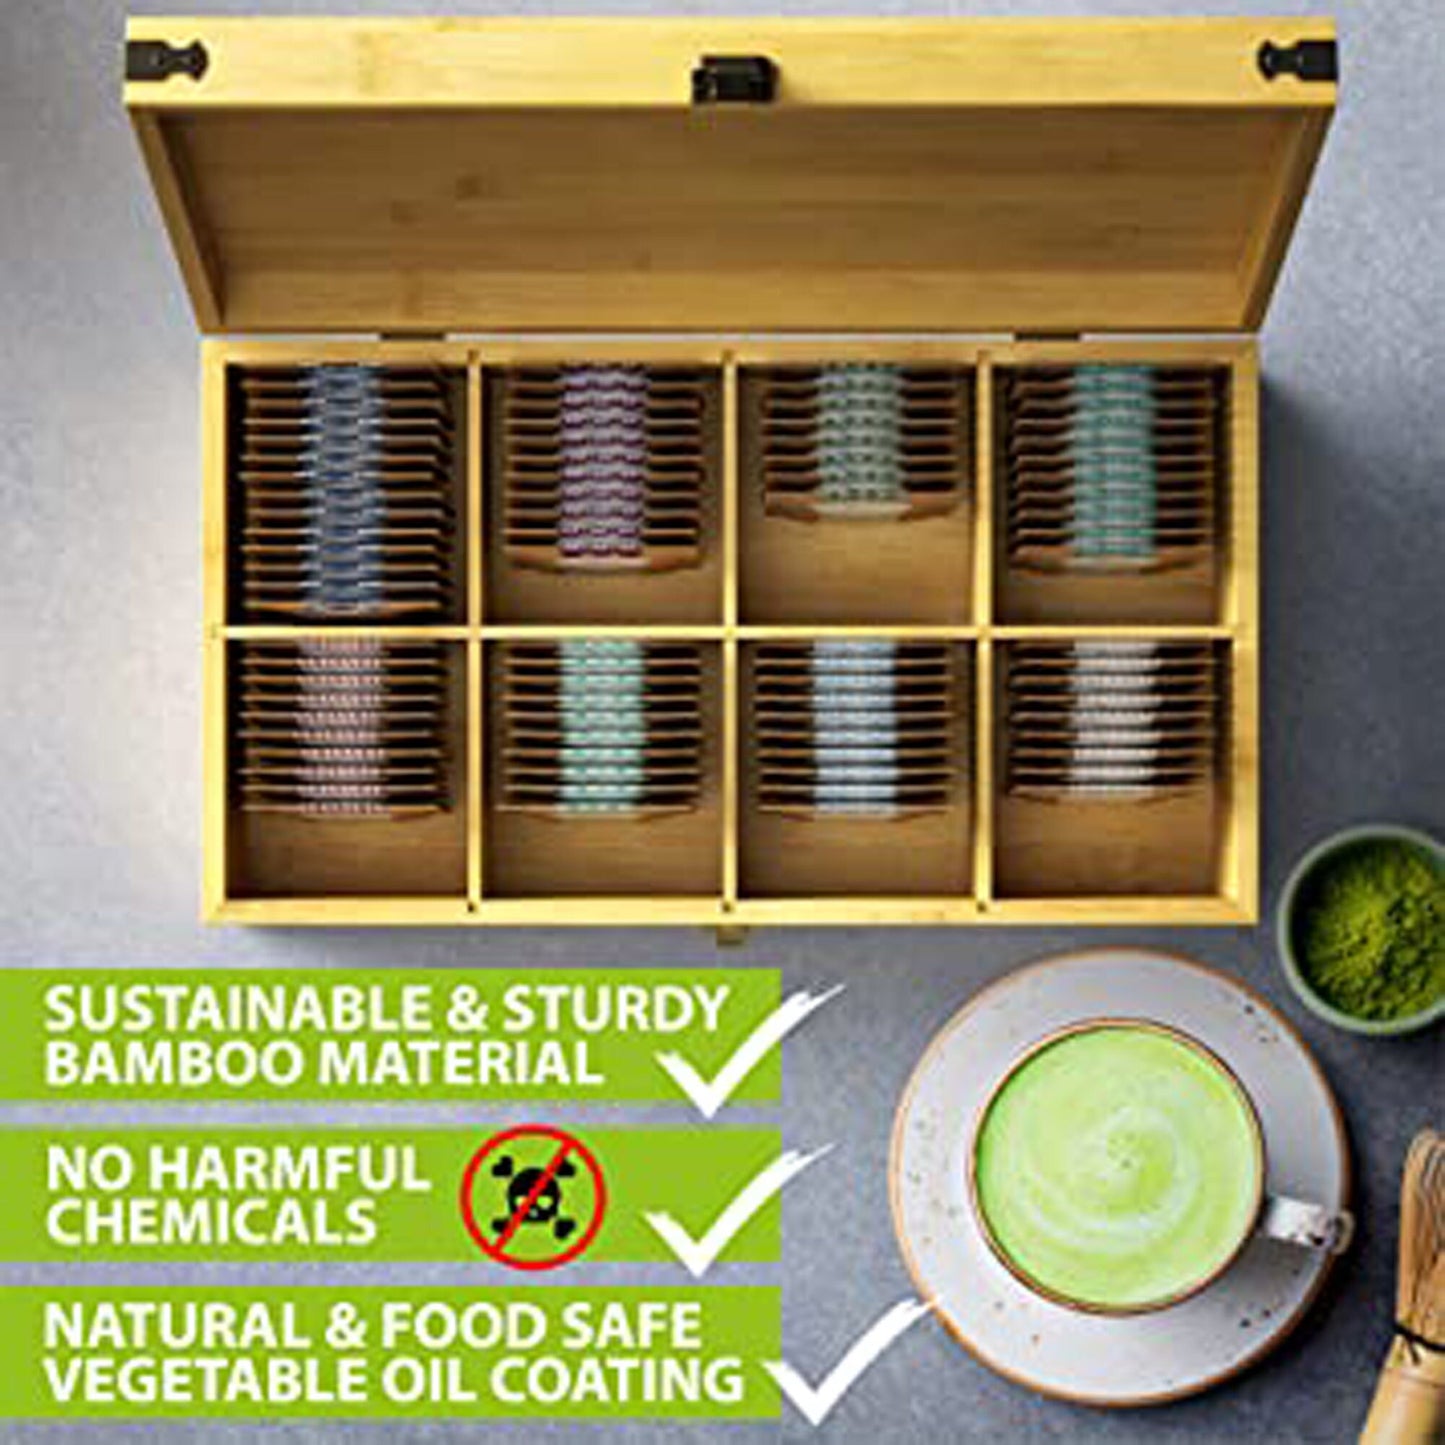 Large Wooden Tea Organizer Box Big 14" Bamboo Storage Chest 8-Compartment Adjustable Shelves 100% Handmade Craft Eco-Friendly Natural Decor